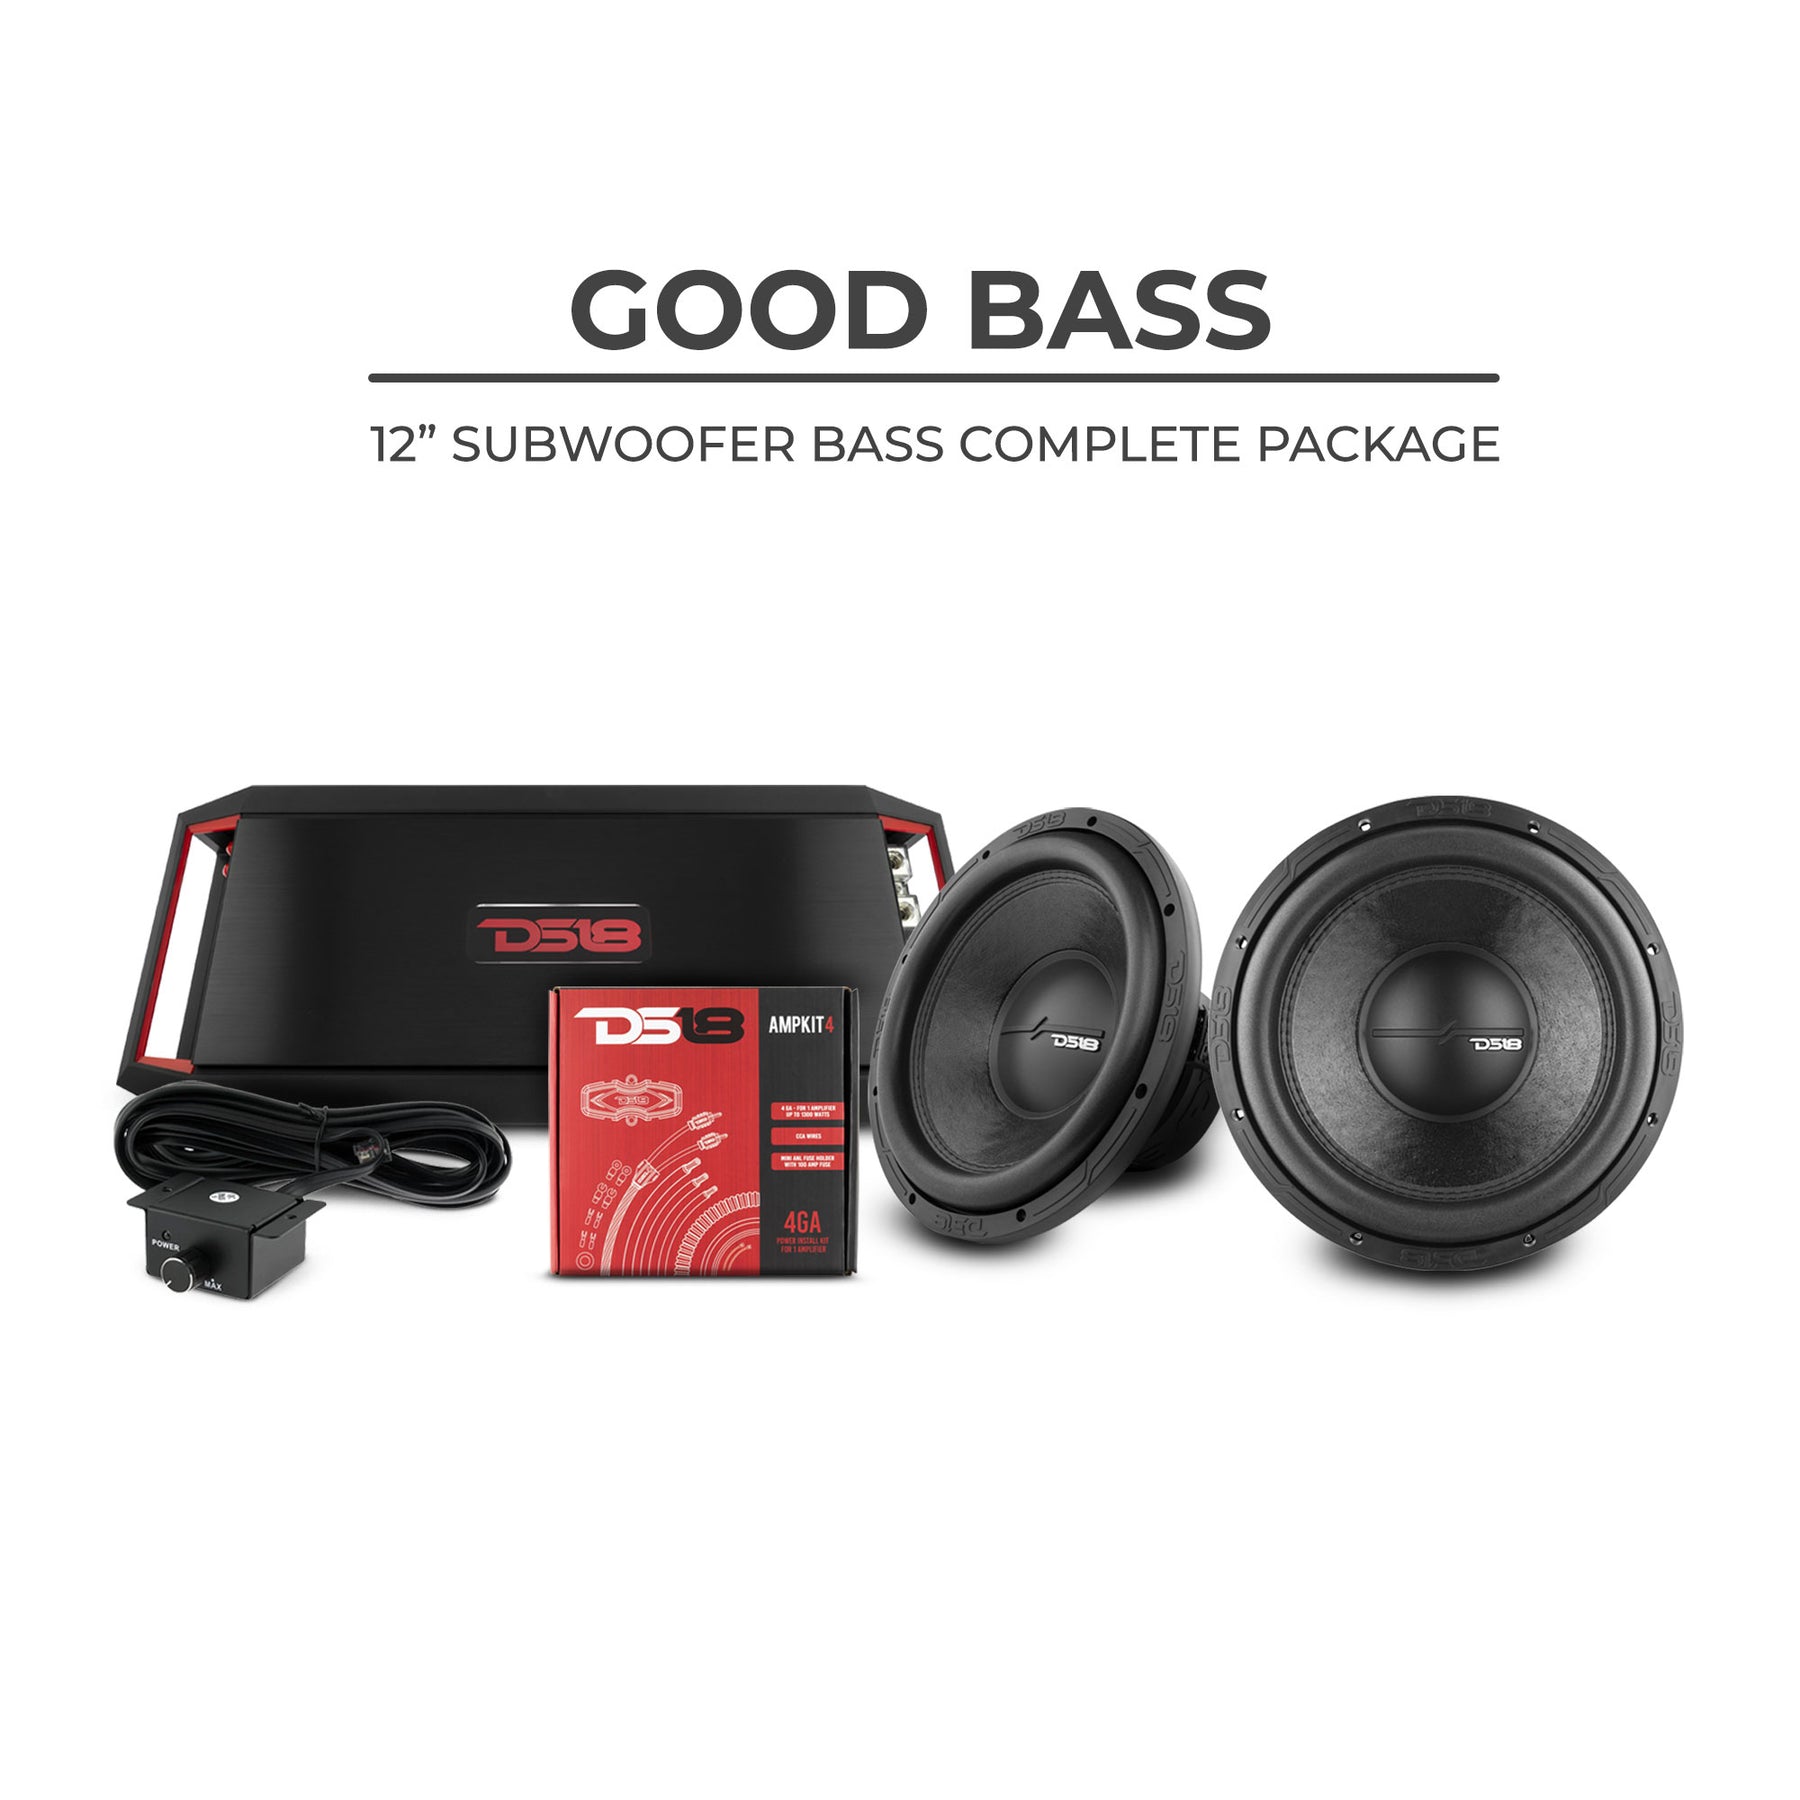 DS18 Good Bass Package